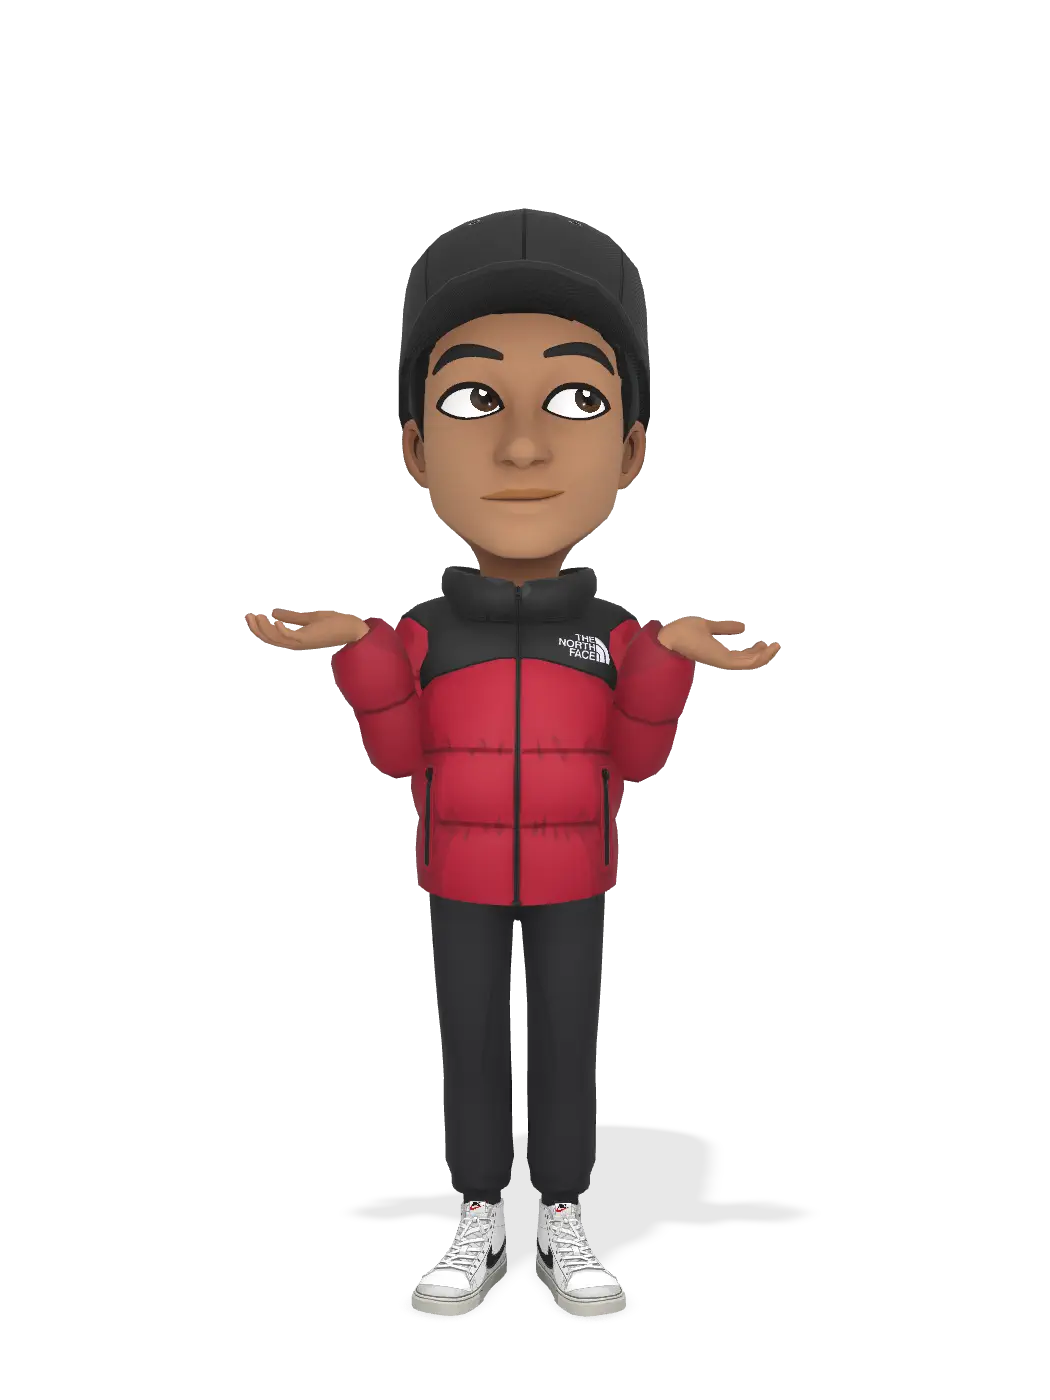 3D Bitmoji for nicolasnmrm avatar